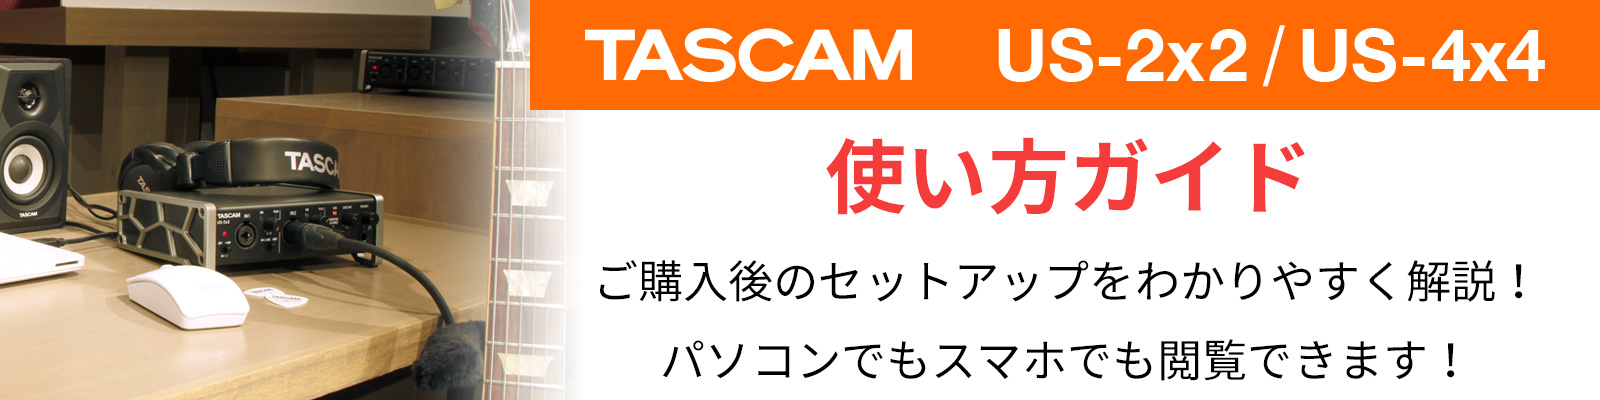 US-4x4 | 製品トップ | TASCAM (日本)